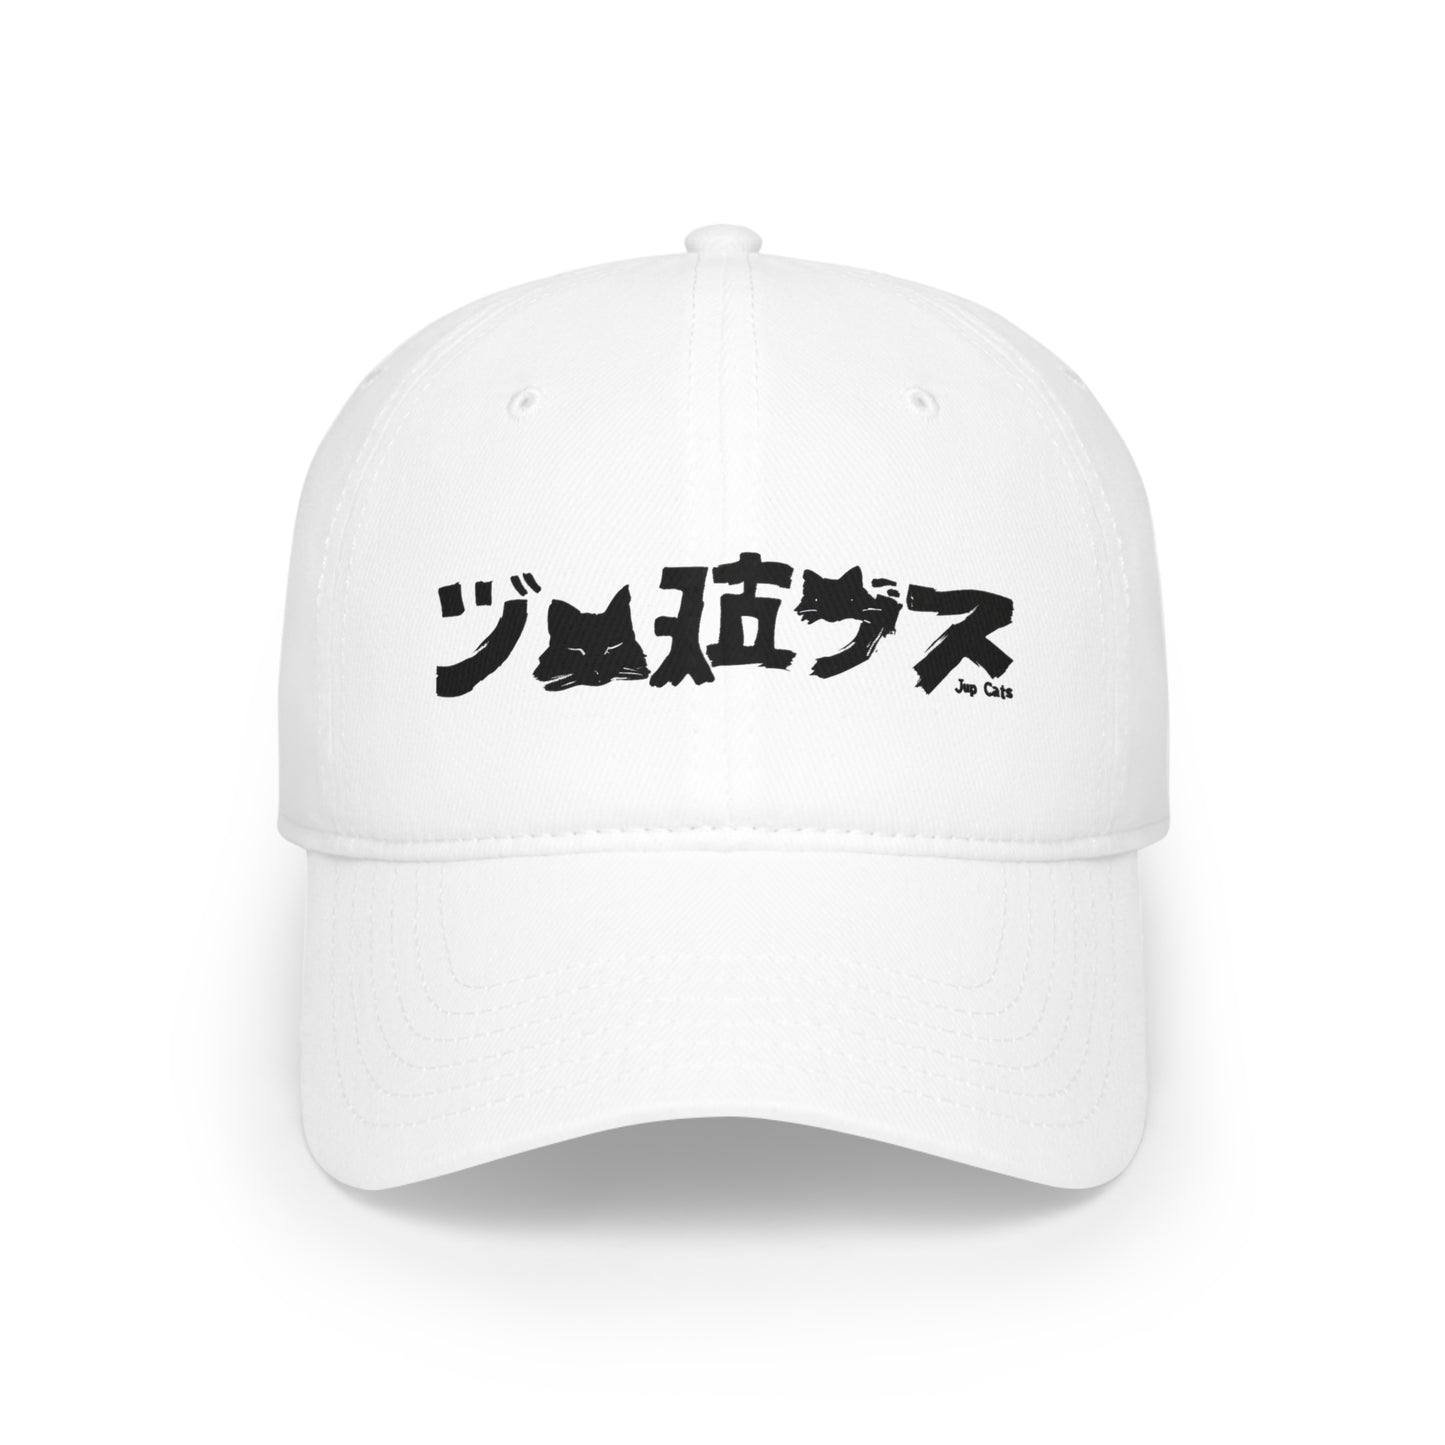 Jup Cats Kanji Baseball Cap